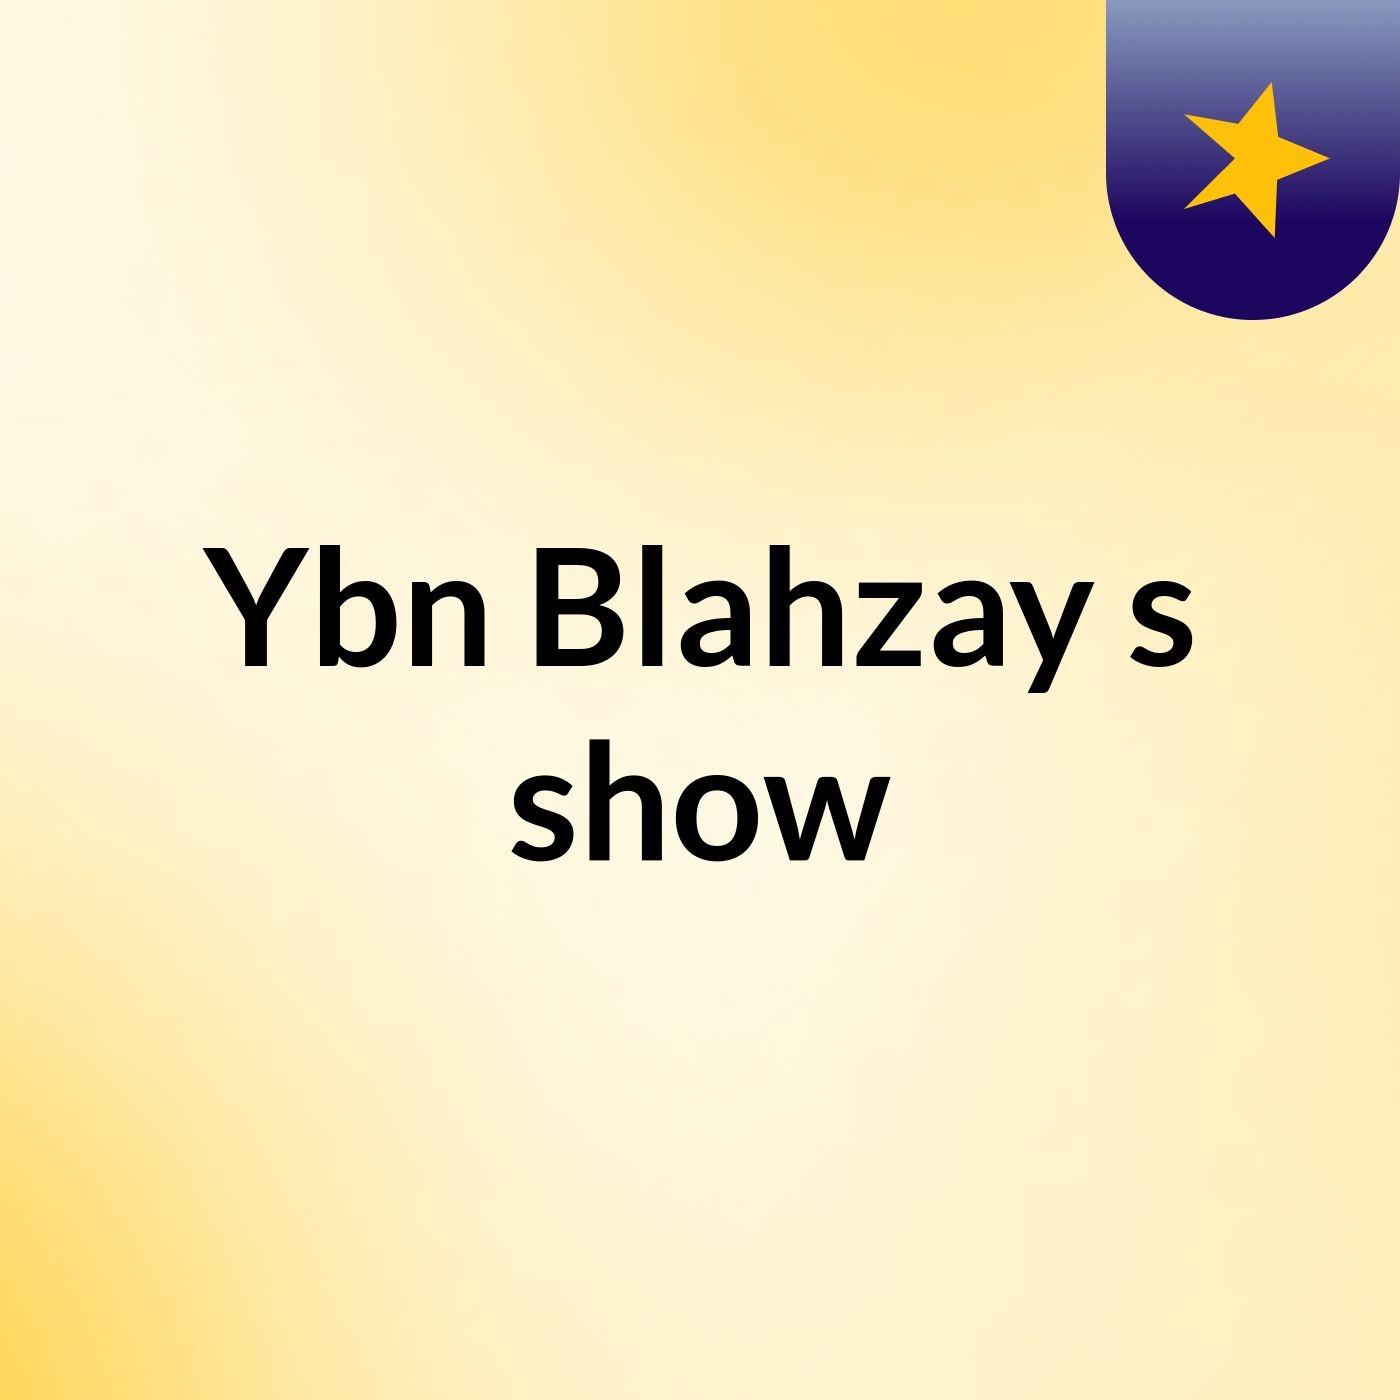 Ybn Blahzay's show